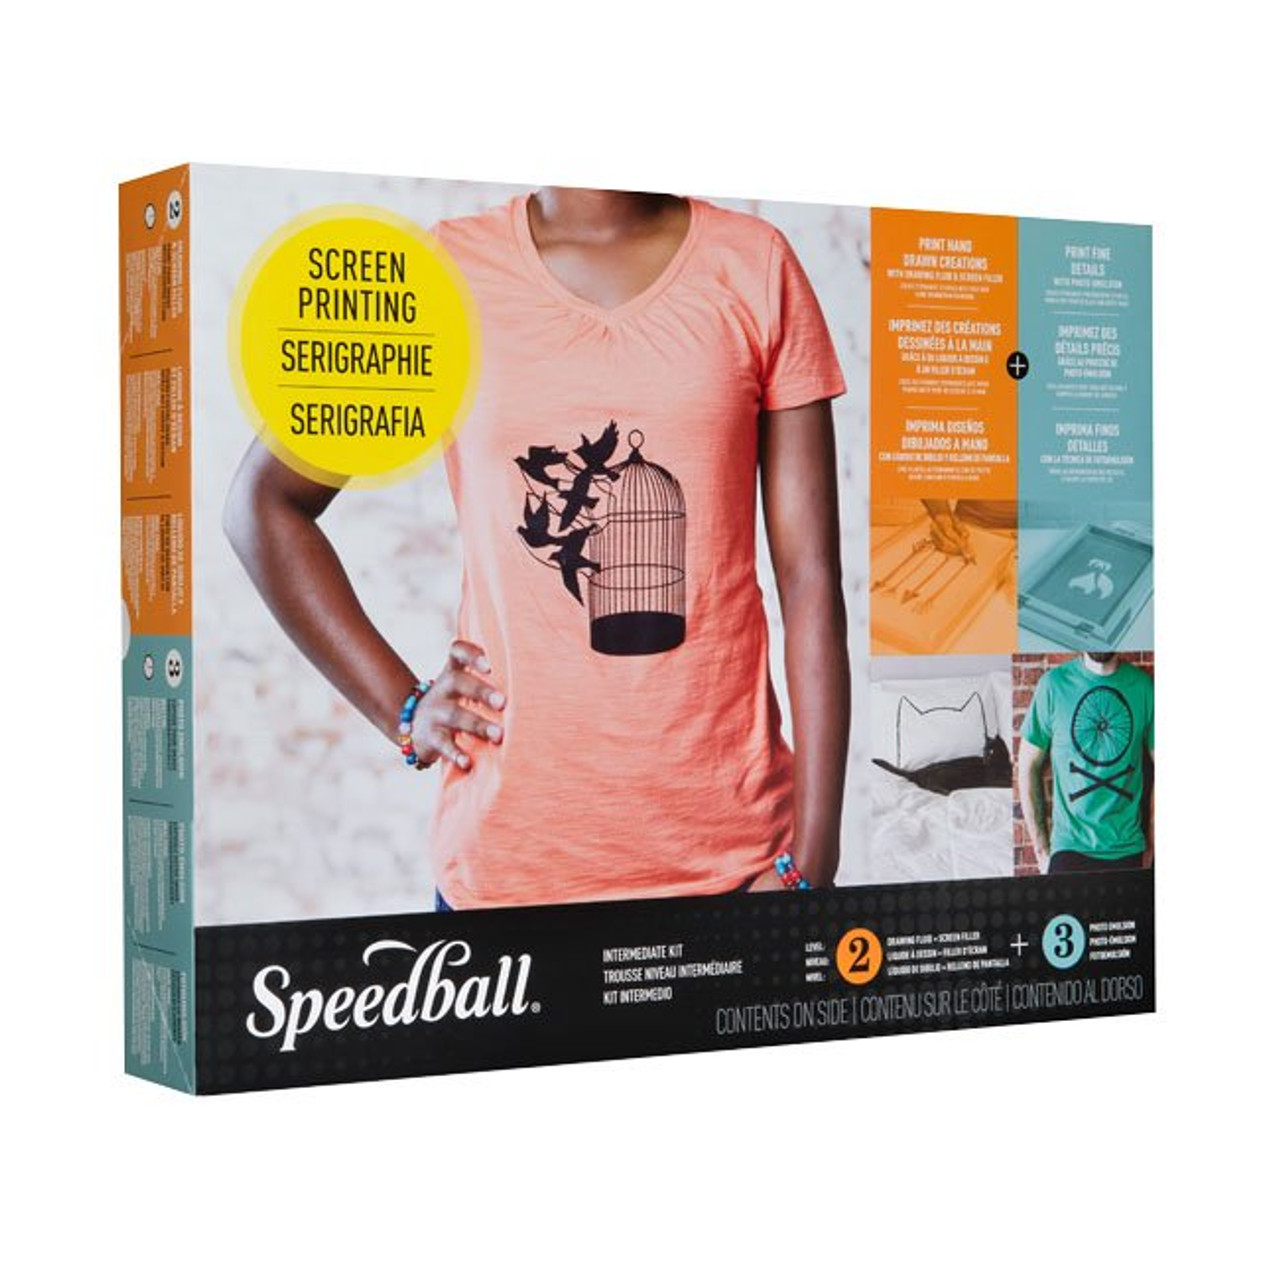 Super Value Fabric Screen Printing Kit - Speedball